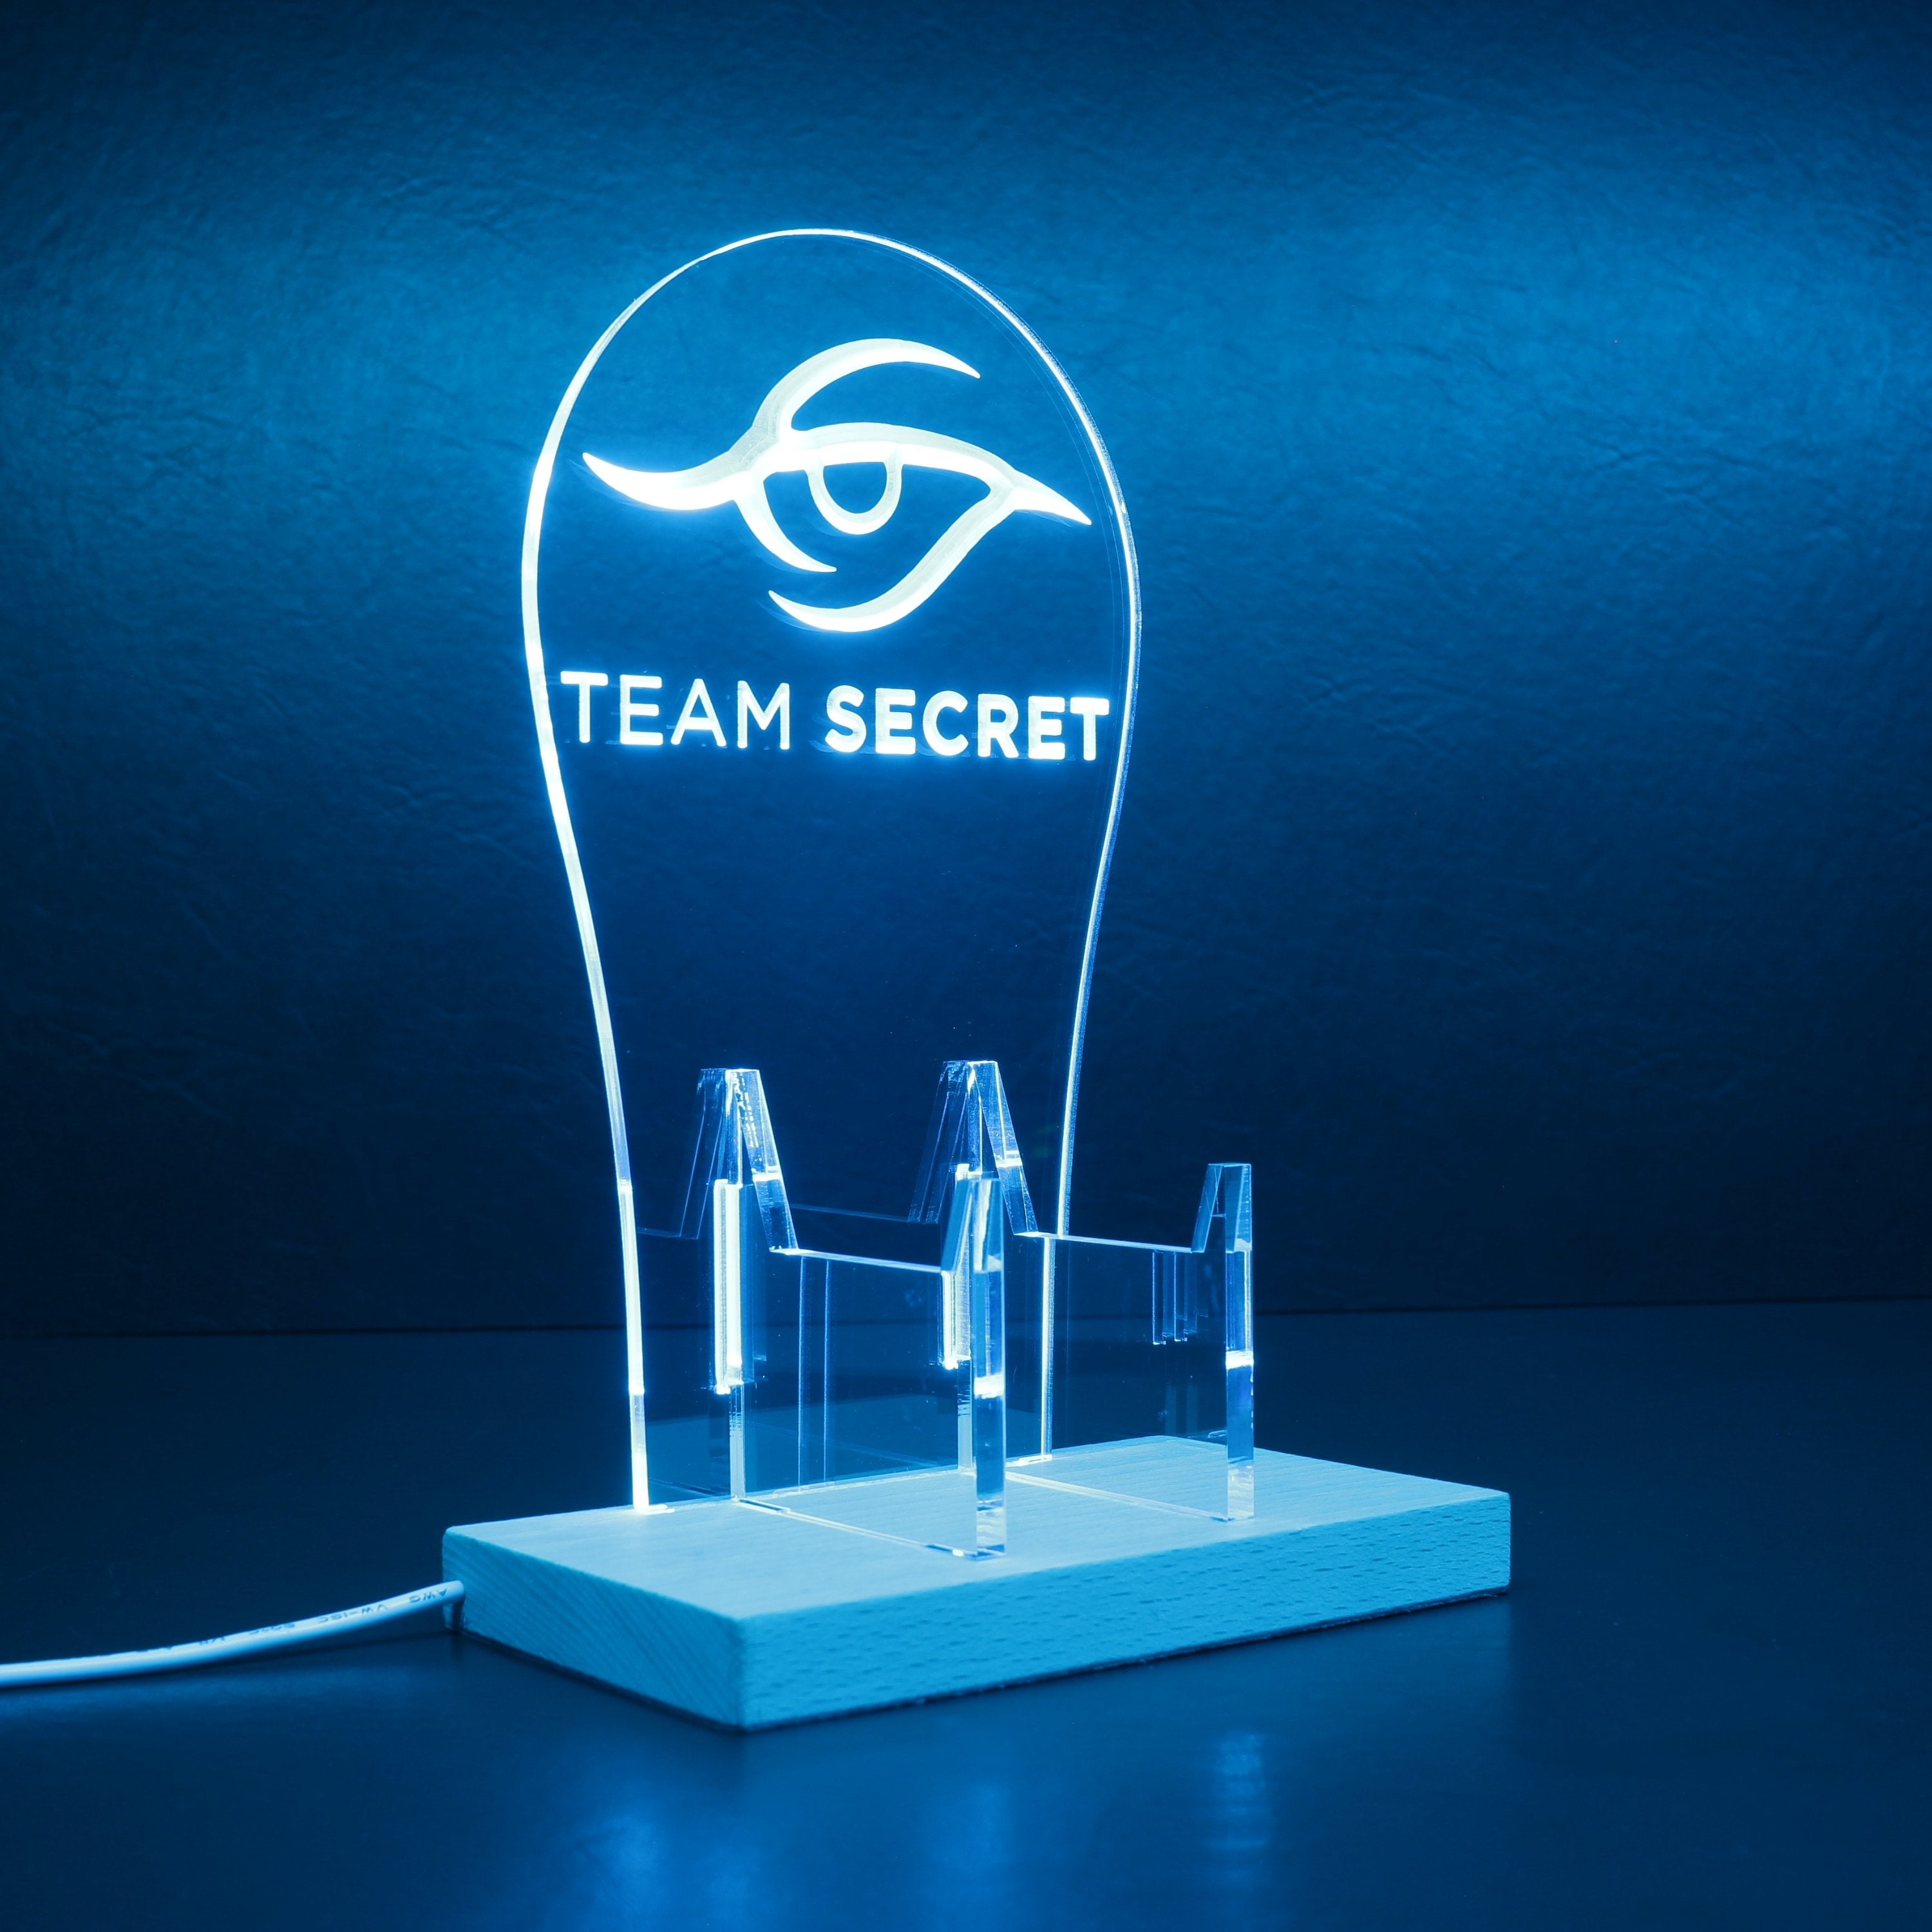 Team Secret LED Gaming Headset Controller Stand